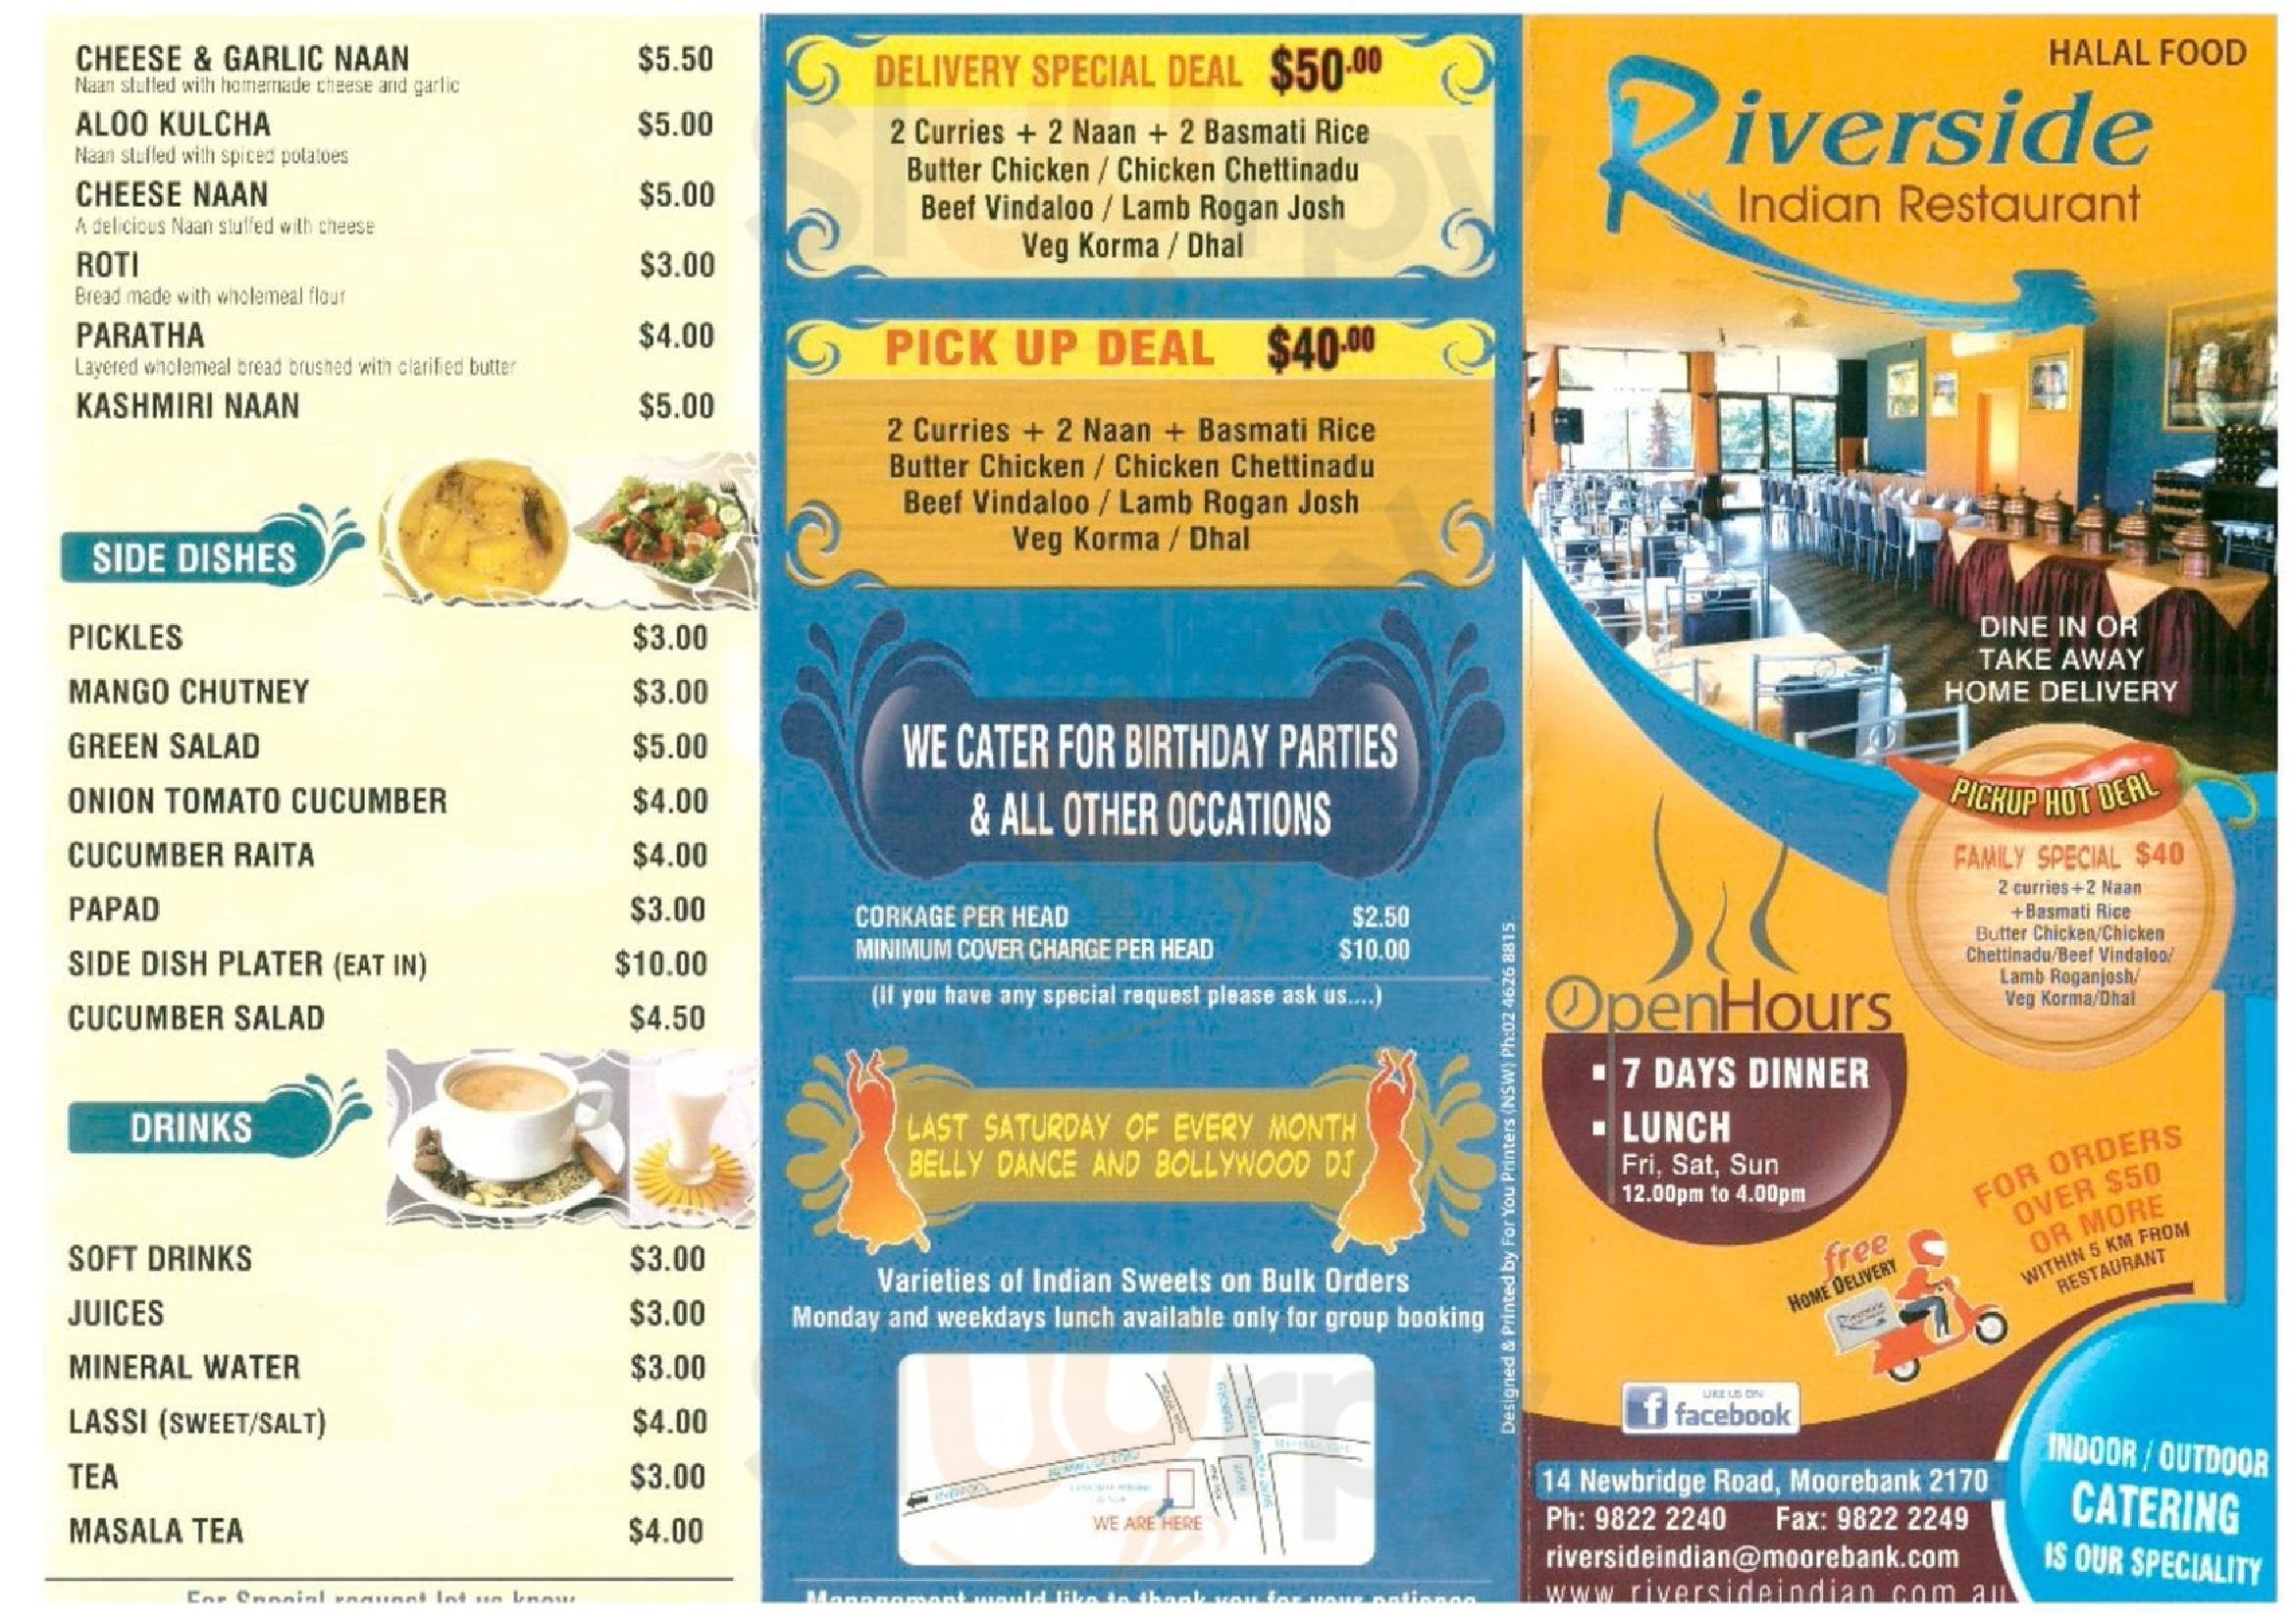 Riverside Indian Restaurant Liverpool Menu - 1